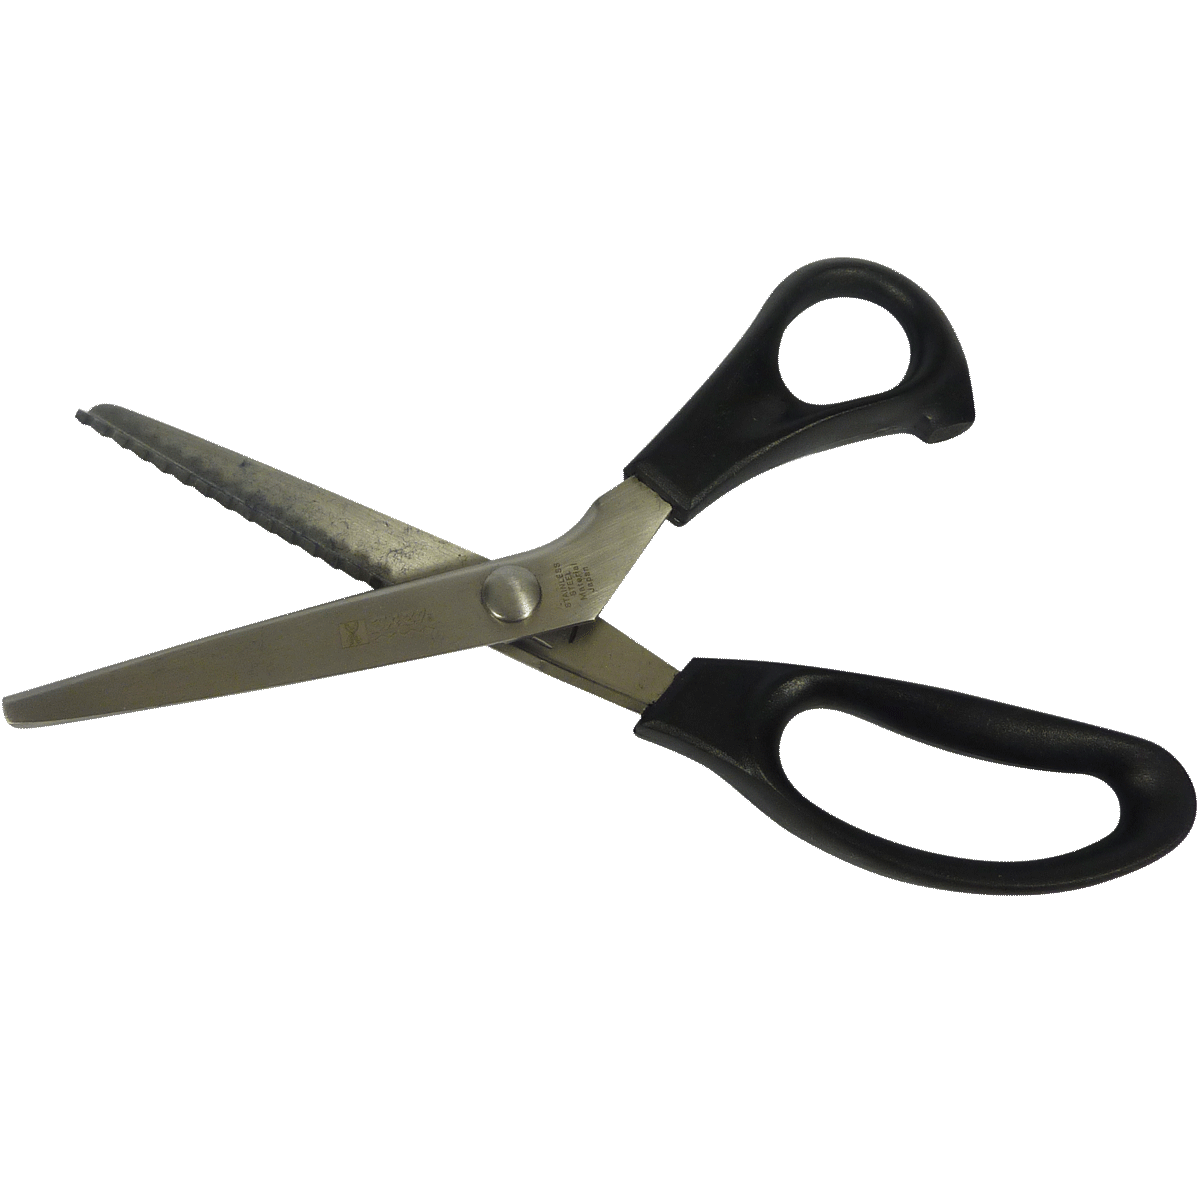 Zigzag scissors Stock Photo by ©kagemicrotank 80563544